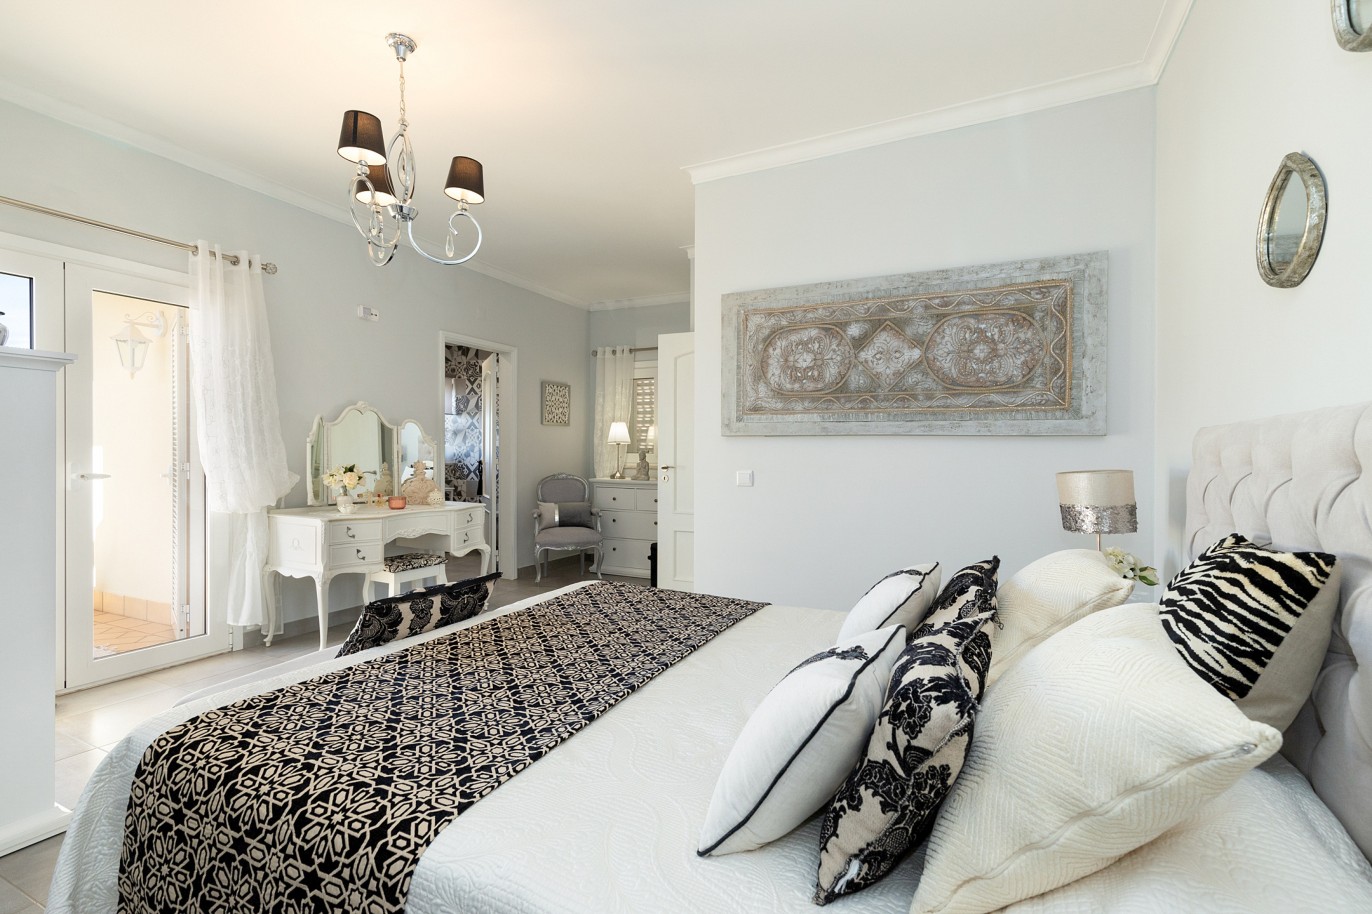 Fantastic 3 bedroom villa with pool, for sale in Algoz, Algarve_215666